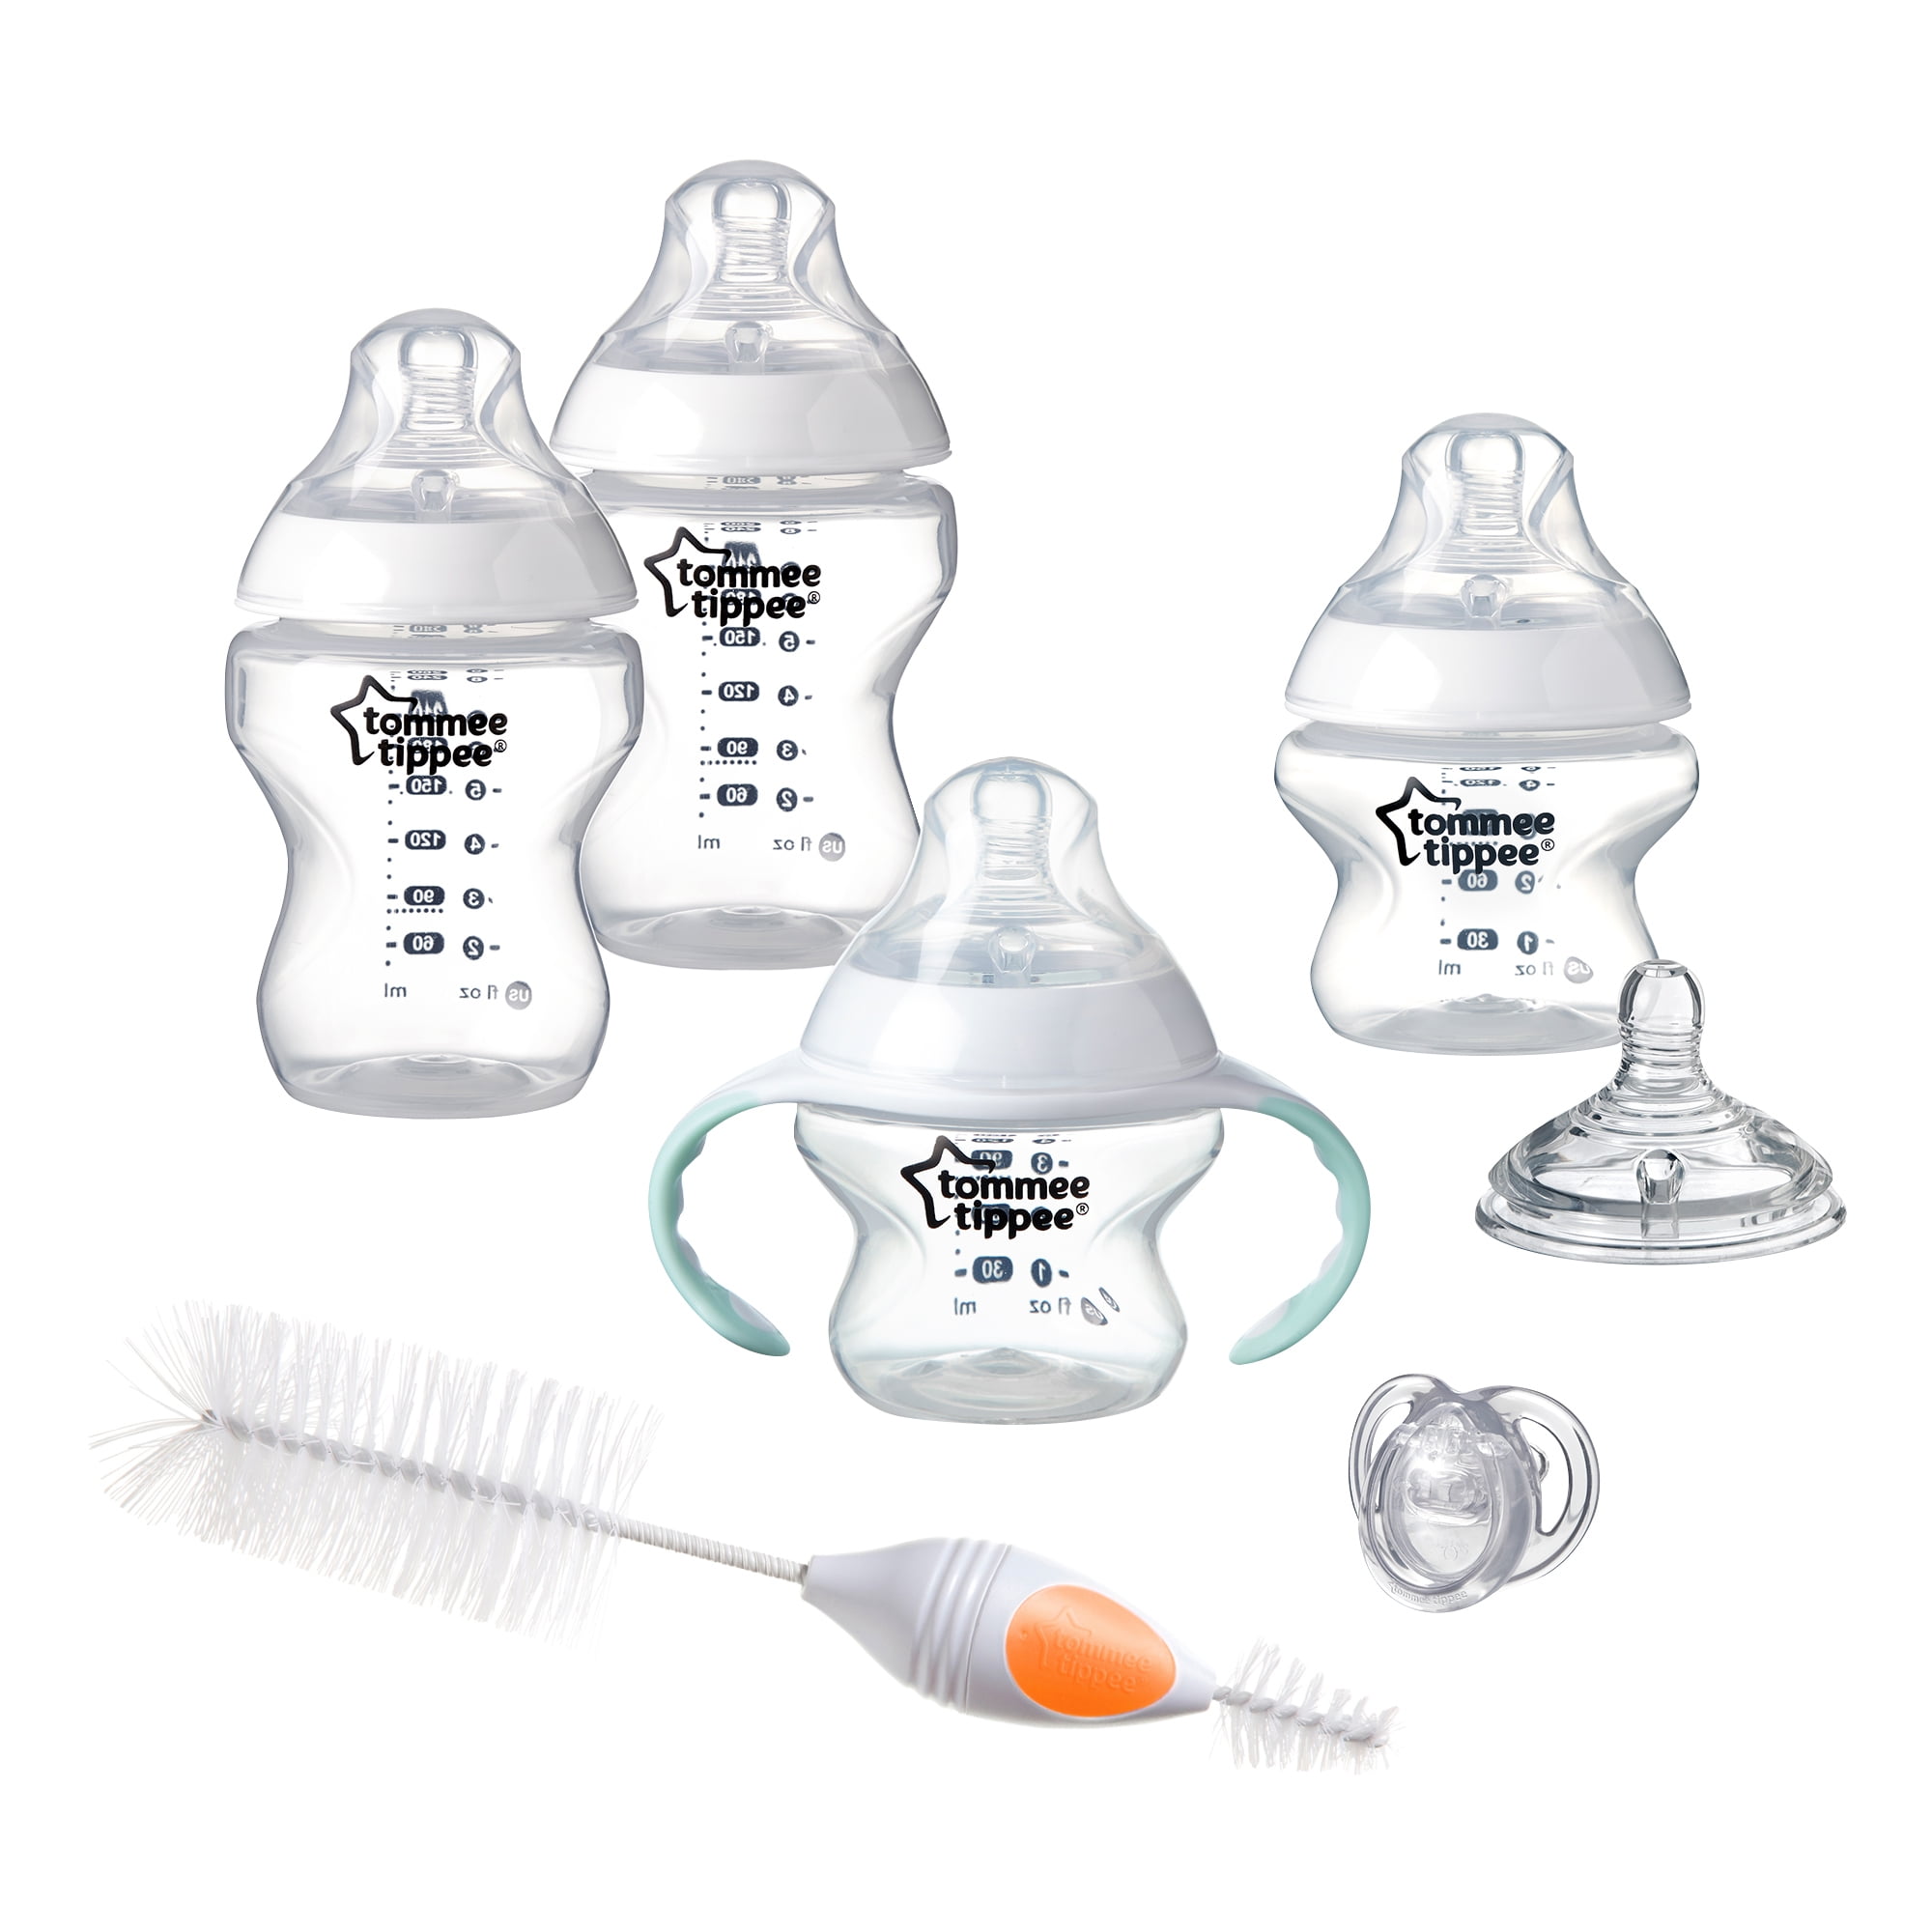 Tommee Tippee Newborn Feeding Value Pack - BPA free - Reduce Colic Symptoms